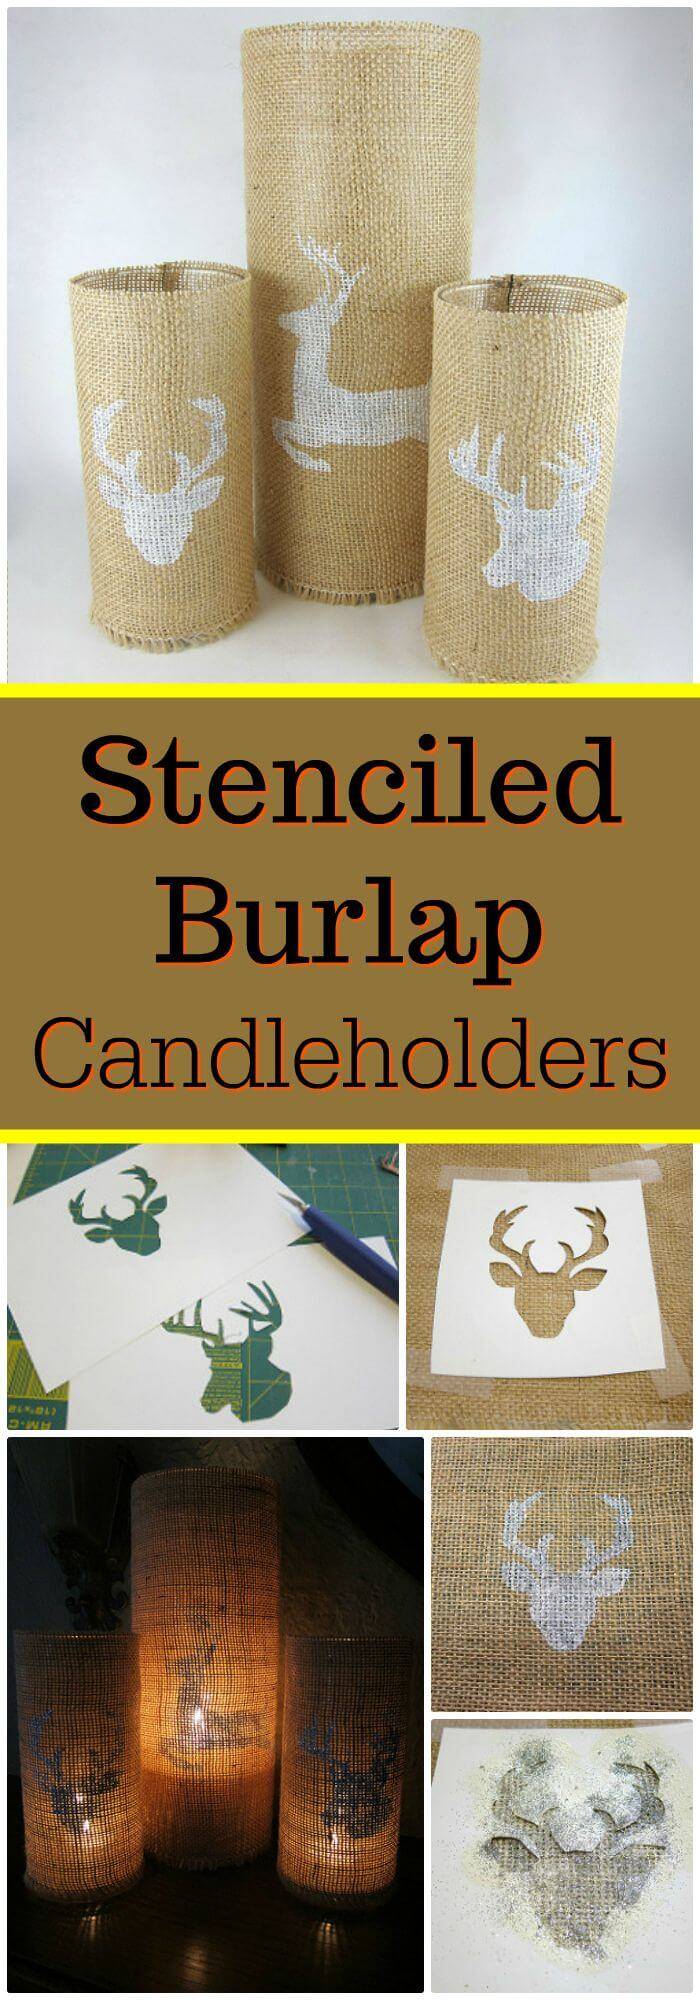 DIY Dollar Stored Stenciled Burlap Candleholders